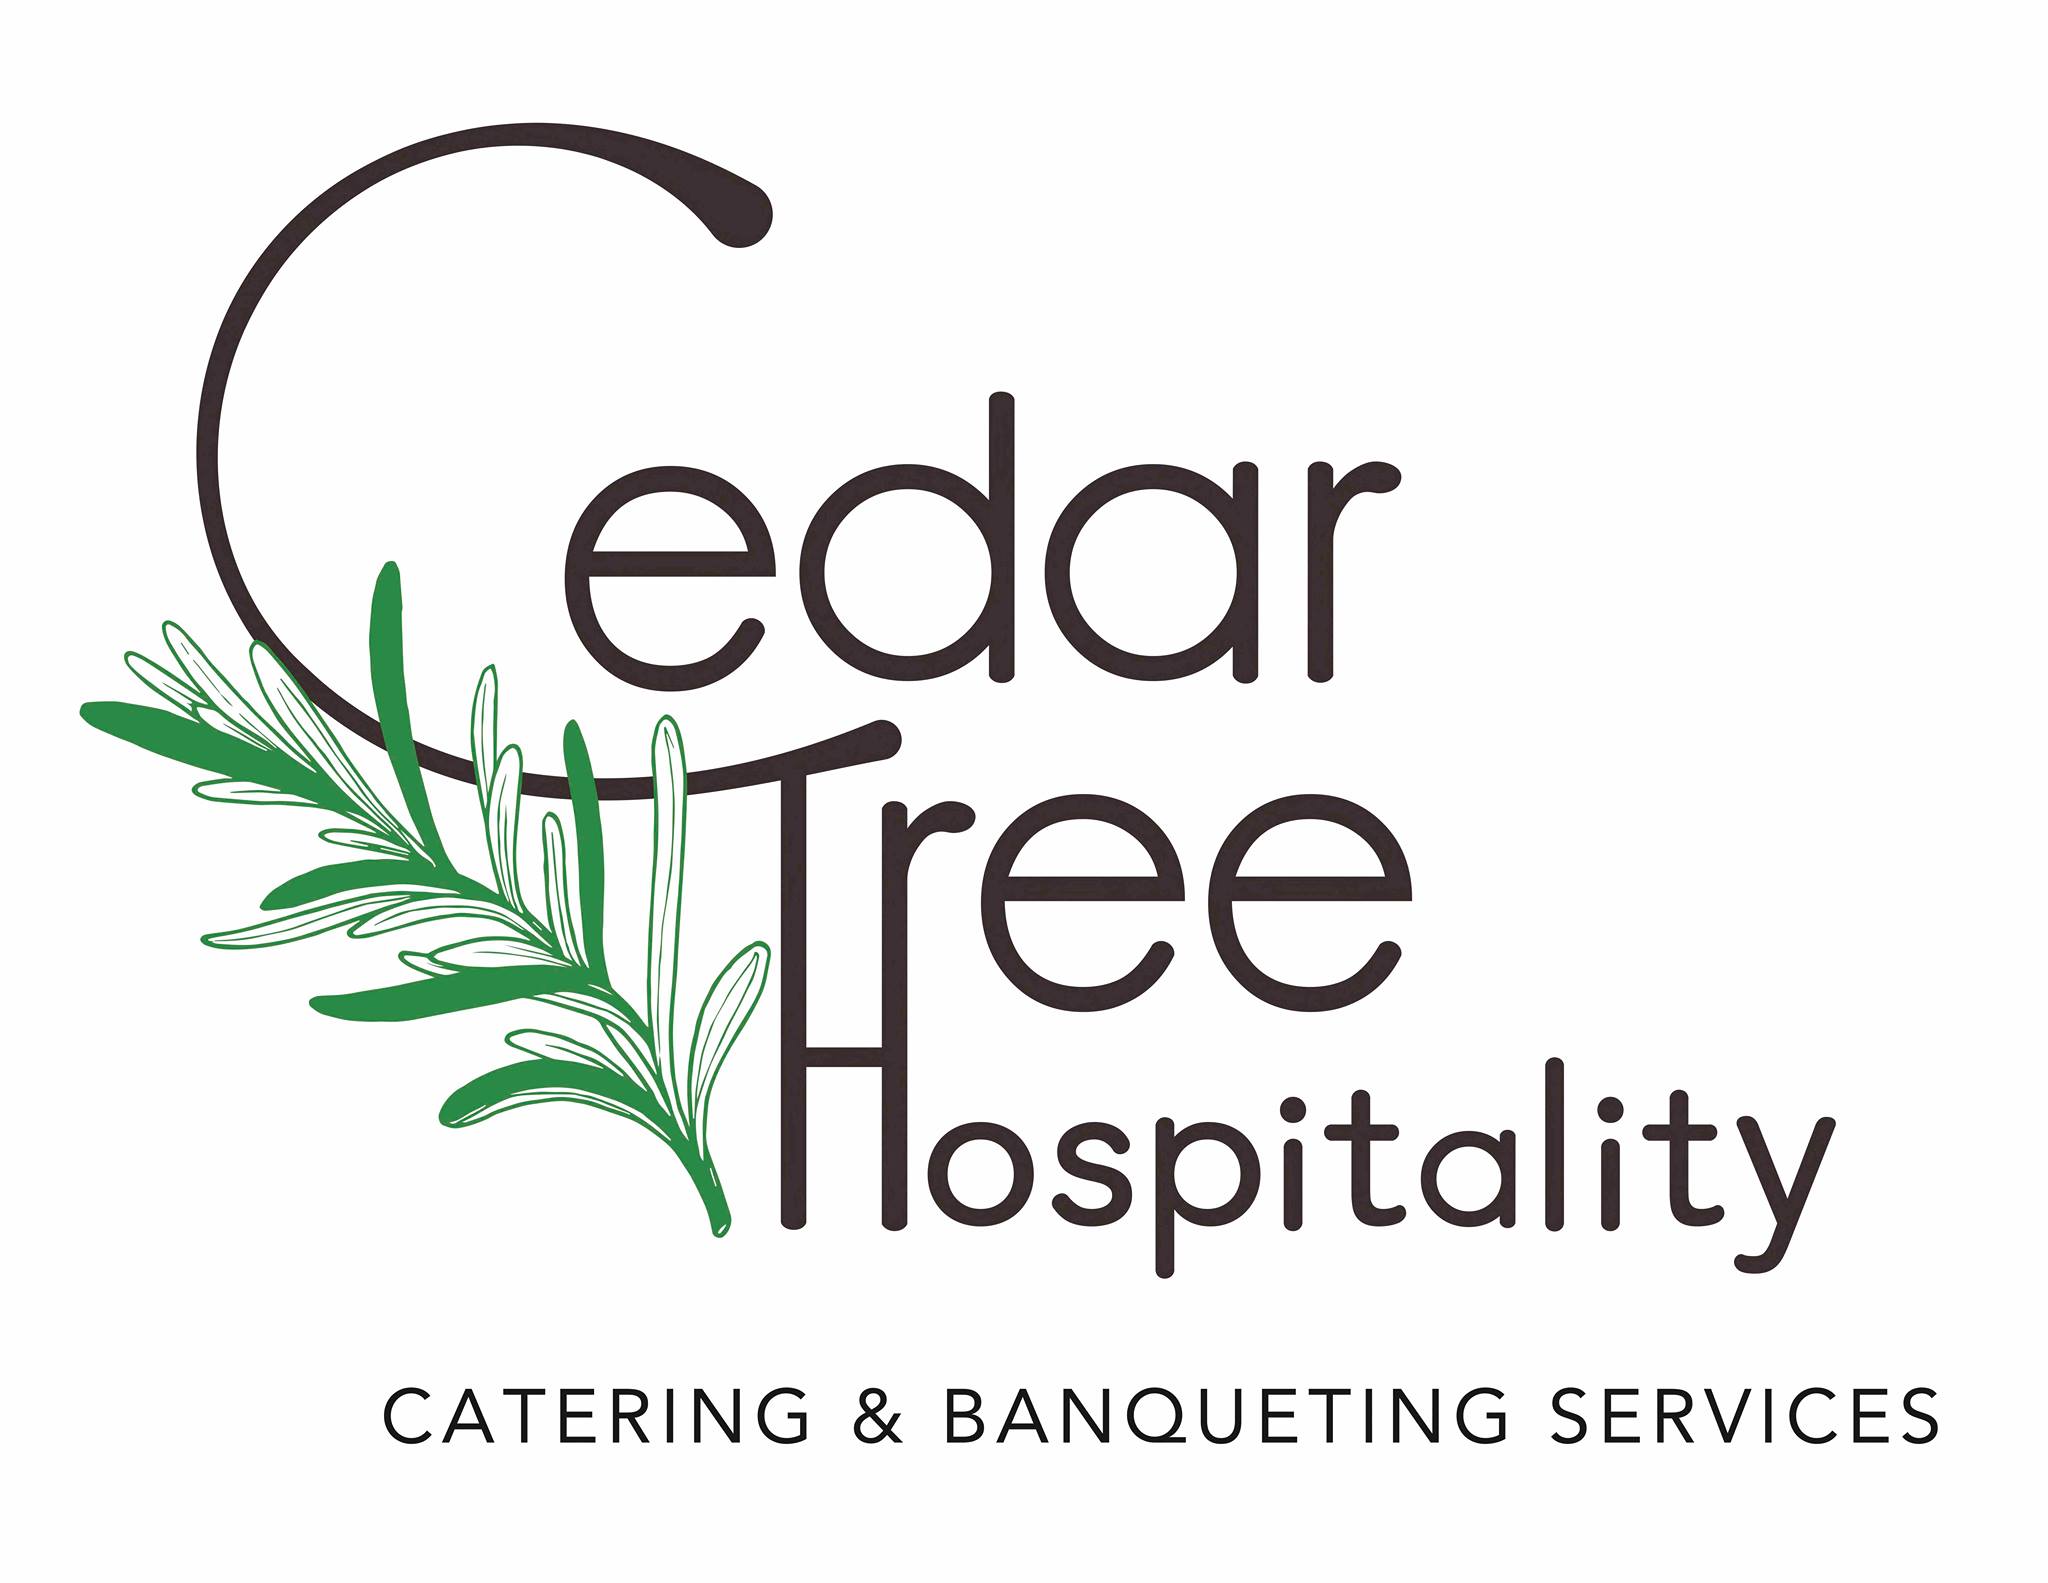 10. Cedar tree Catering